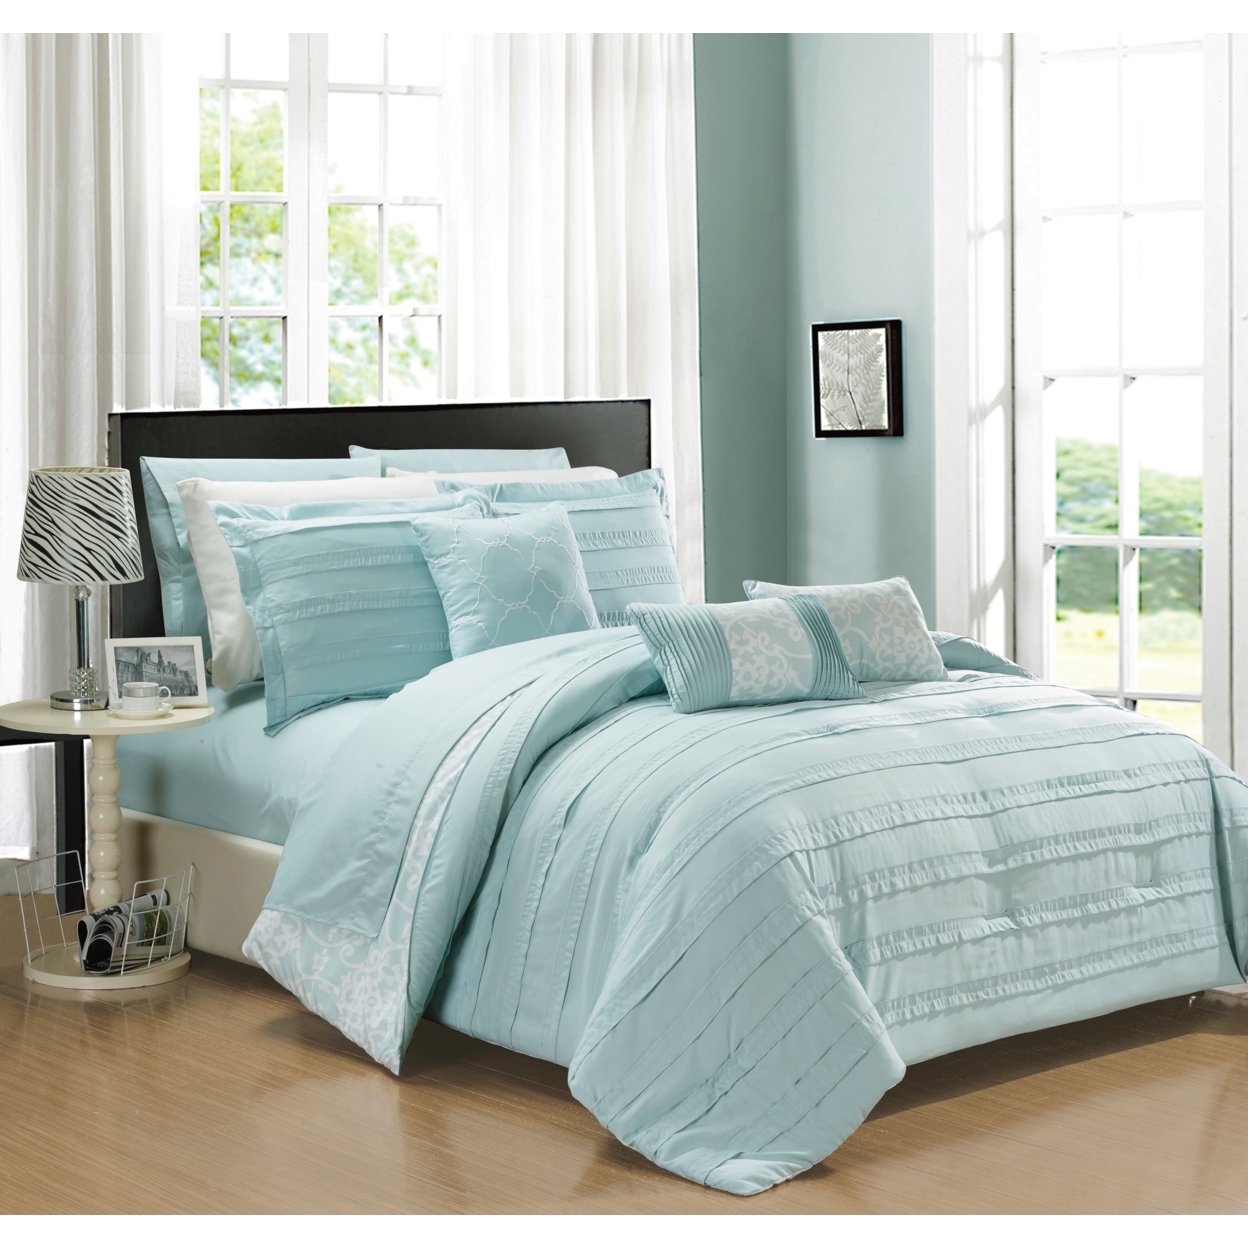 10-Piece Reversible Bed In A Bag Comforter & Sheet Set, Multiple Colors - Plum, King